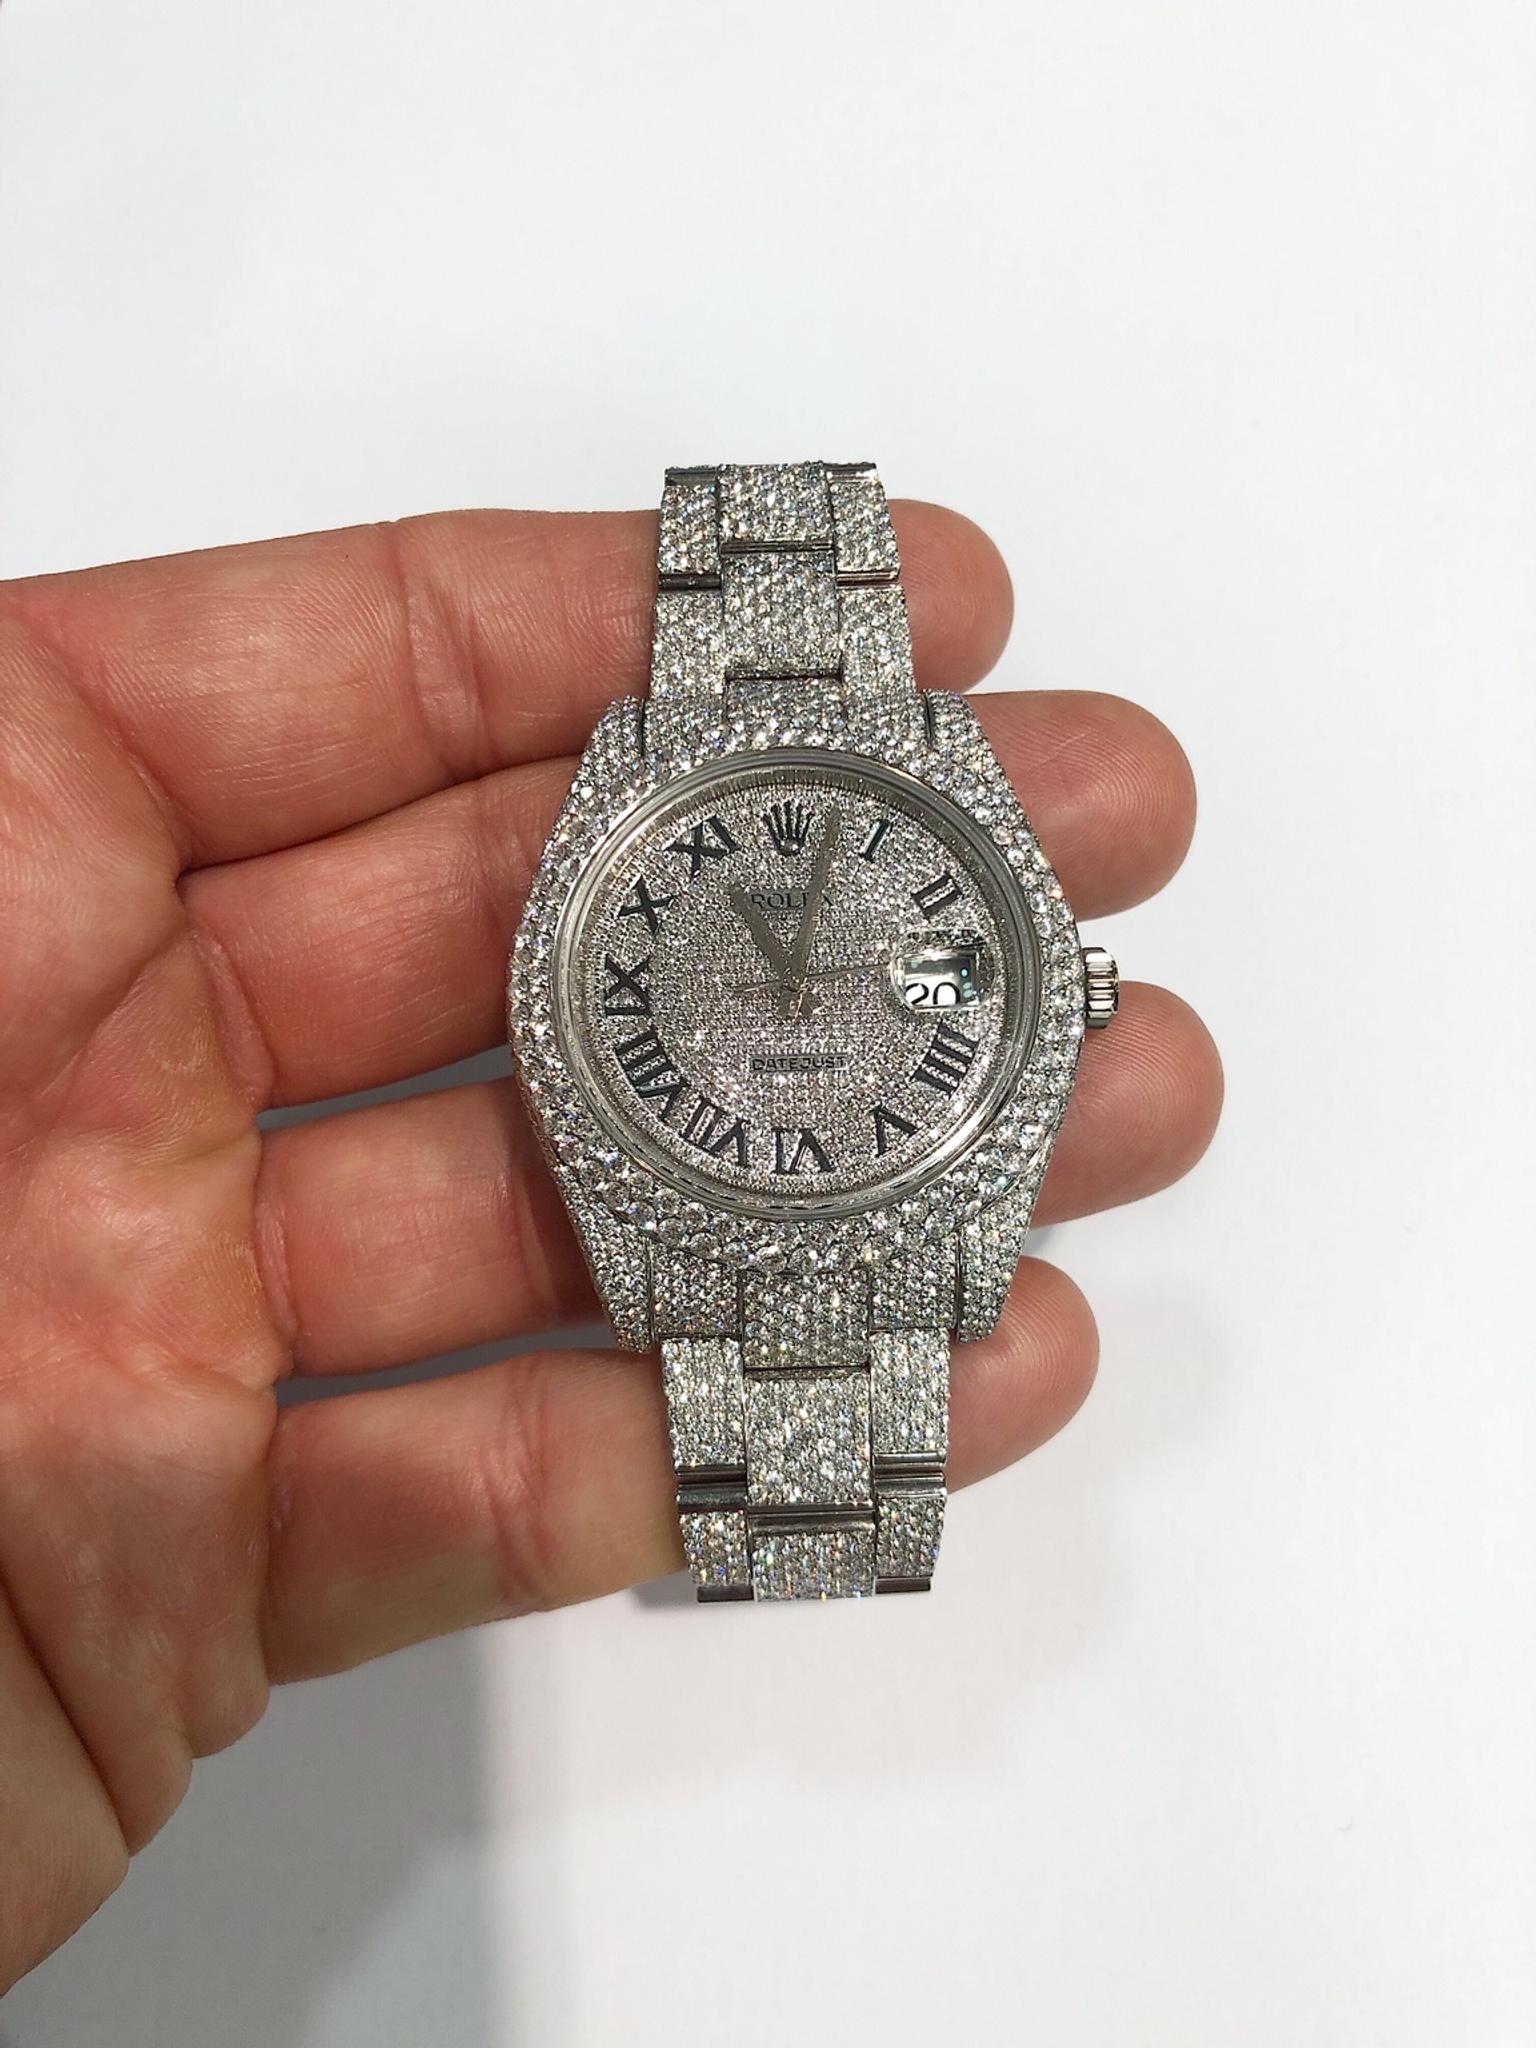 Rolex Vvs - World of Watches